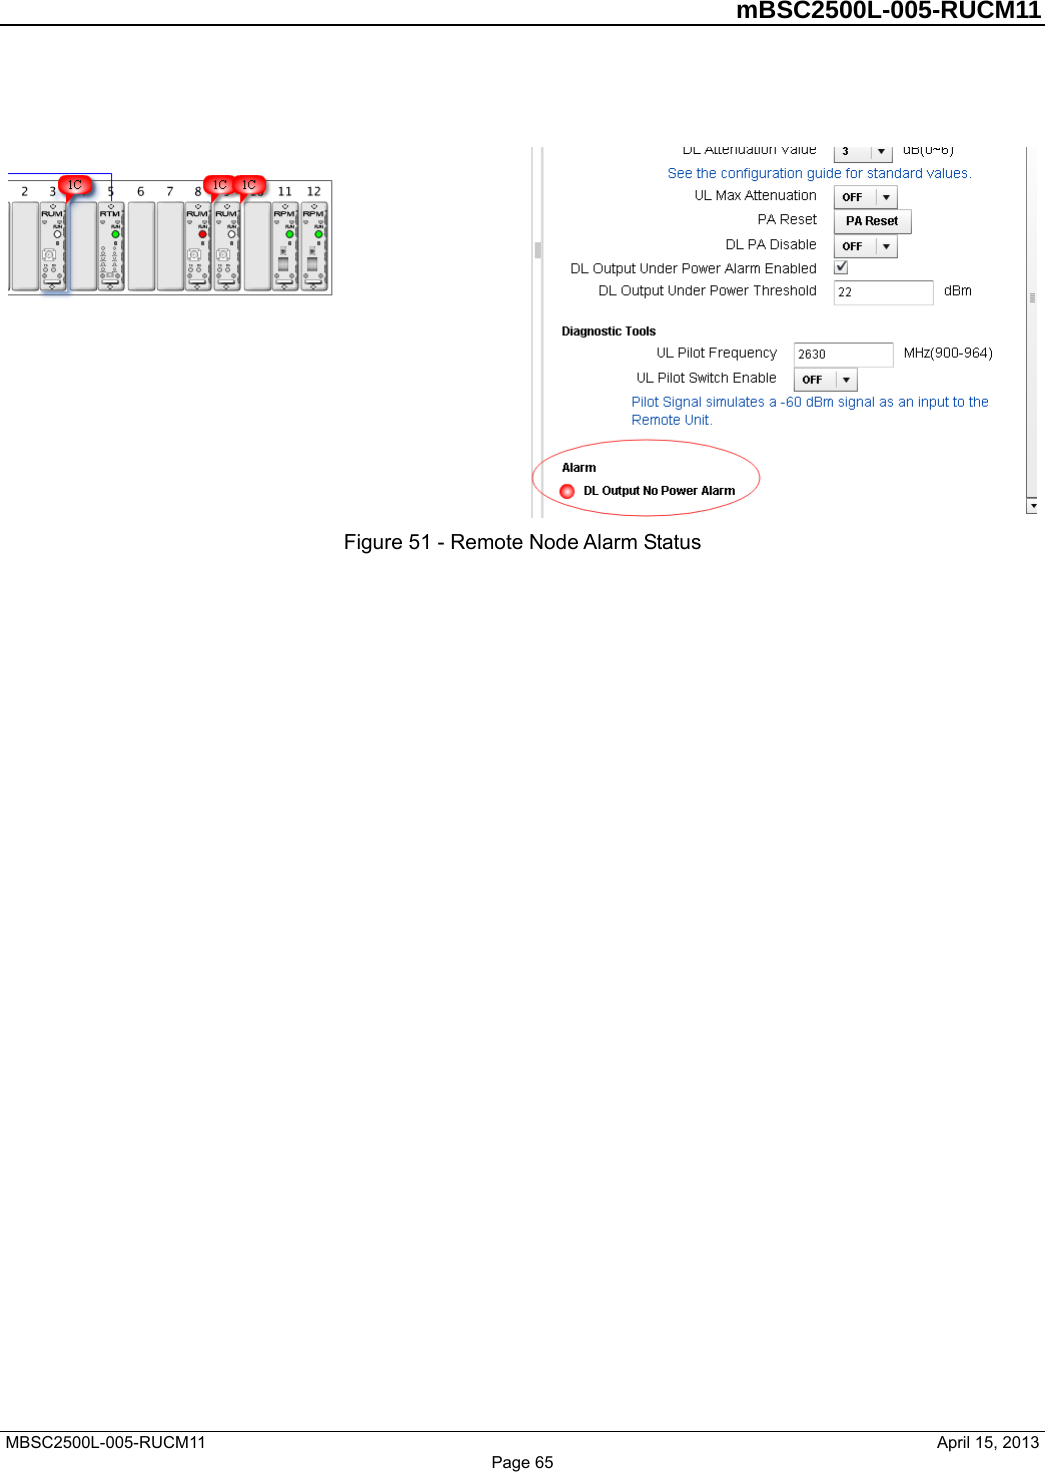         mBSC2500L-005-RUCM11   MBSC2500L-005-RUCM11                                April 15, 2013   Figure 51 - Remote Node Alarm Status Page 65 